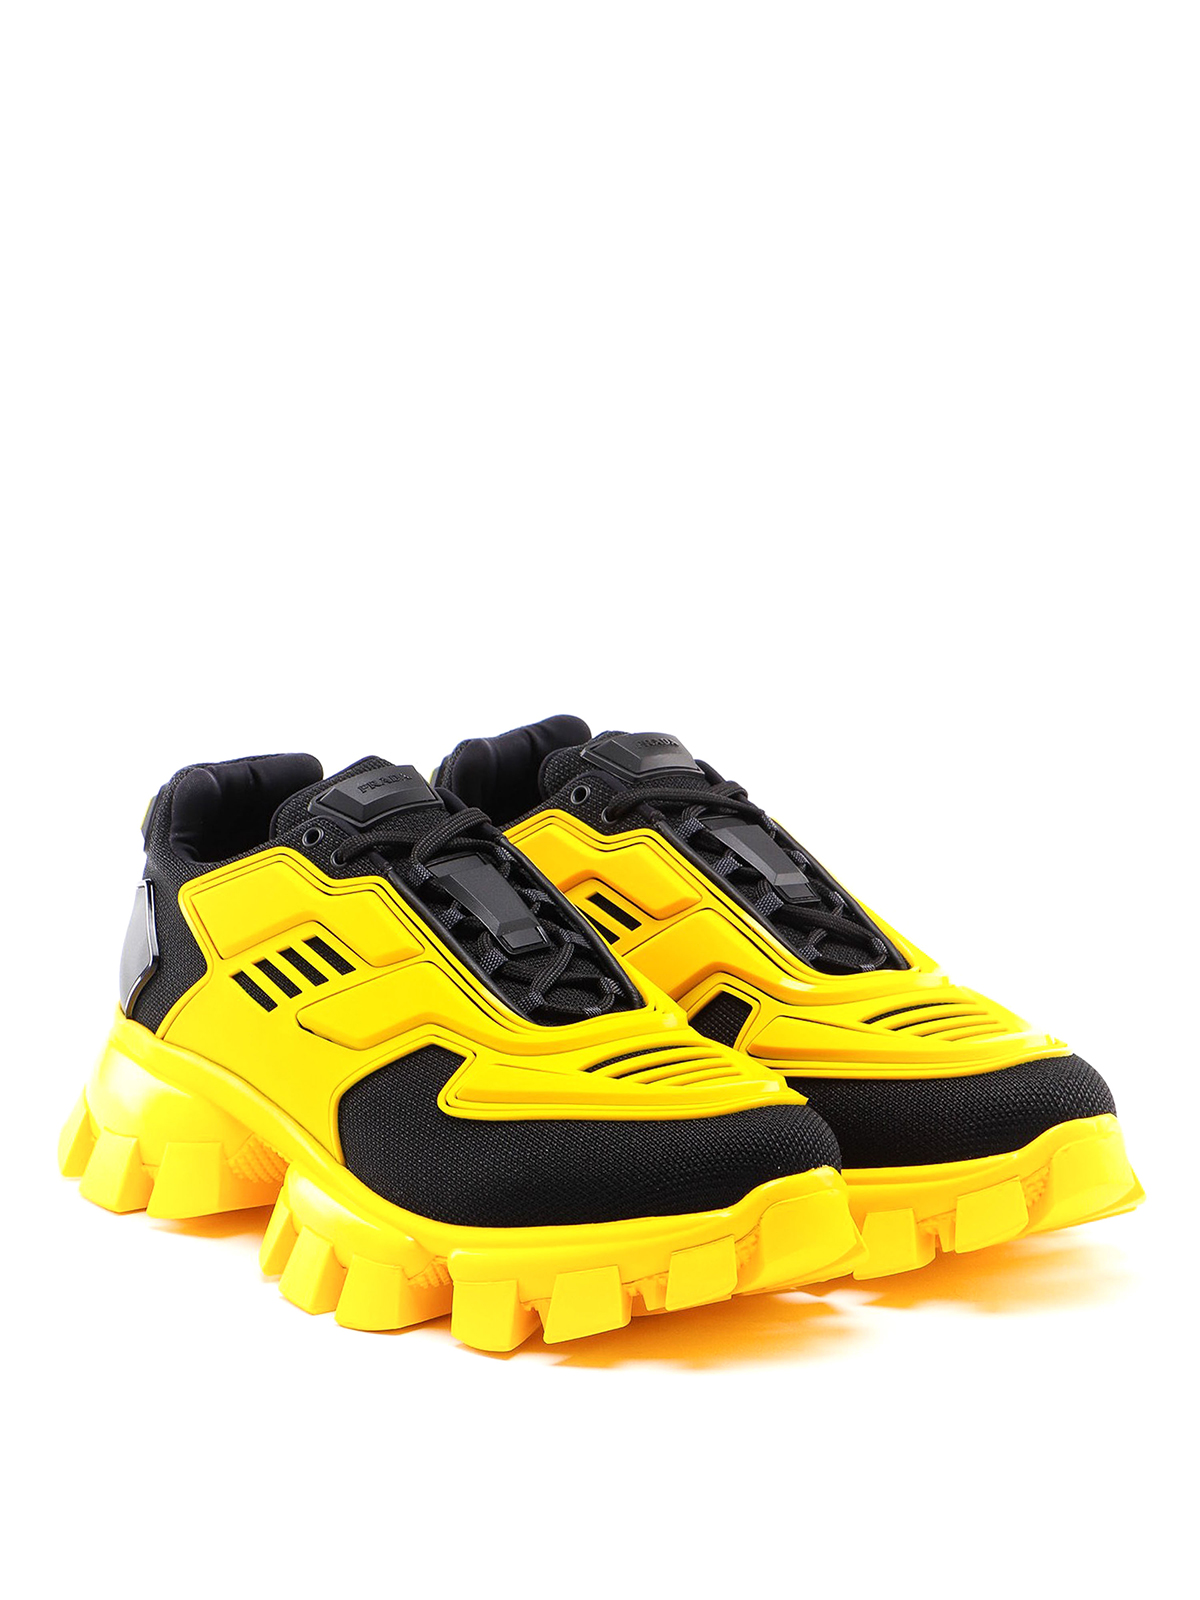 Trainers Prada - Cloudbust Thunder yellow and black sneakers - 2EG2933KZUC5Z